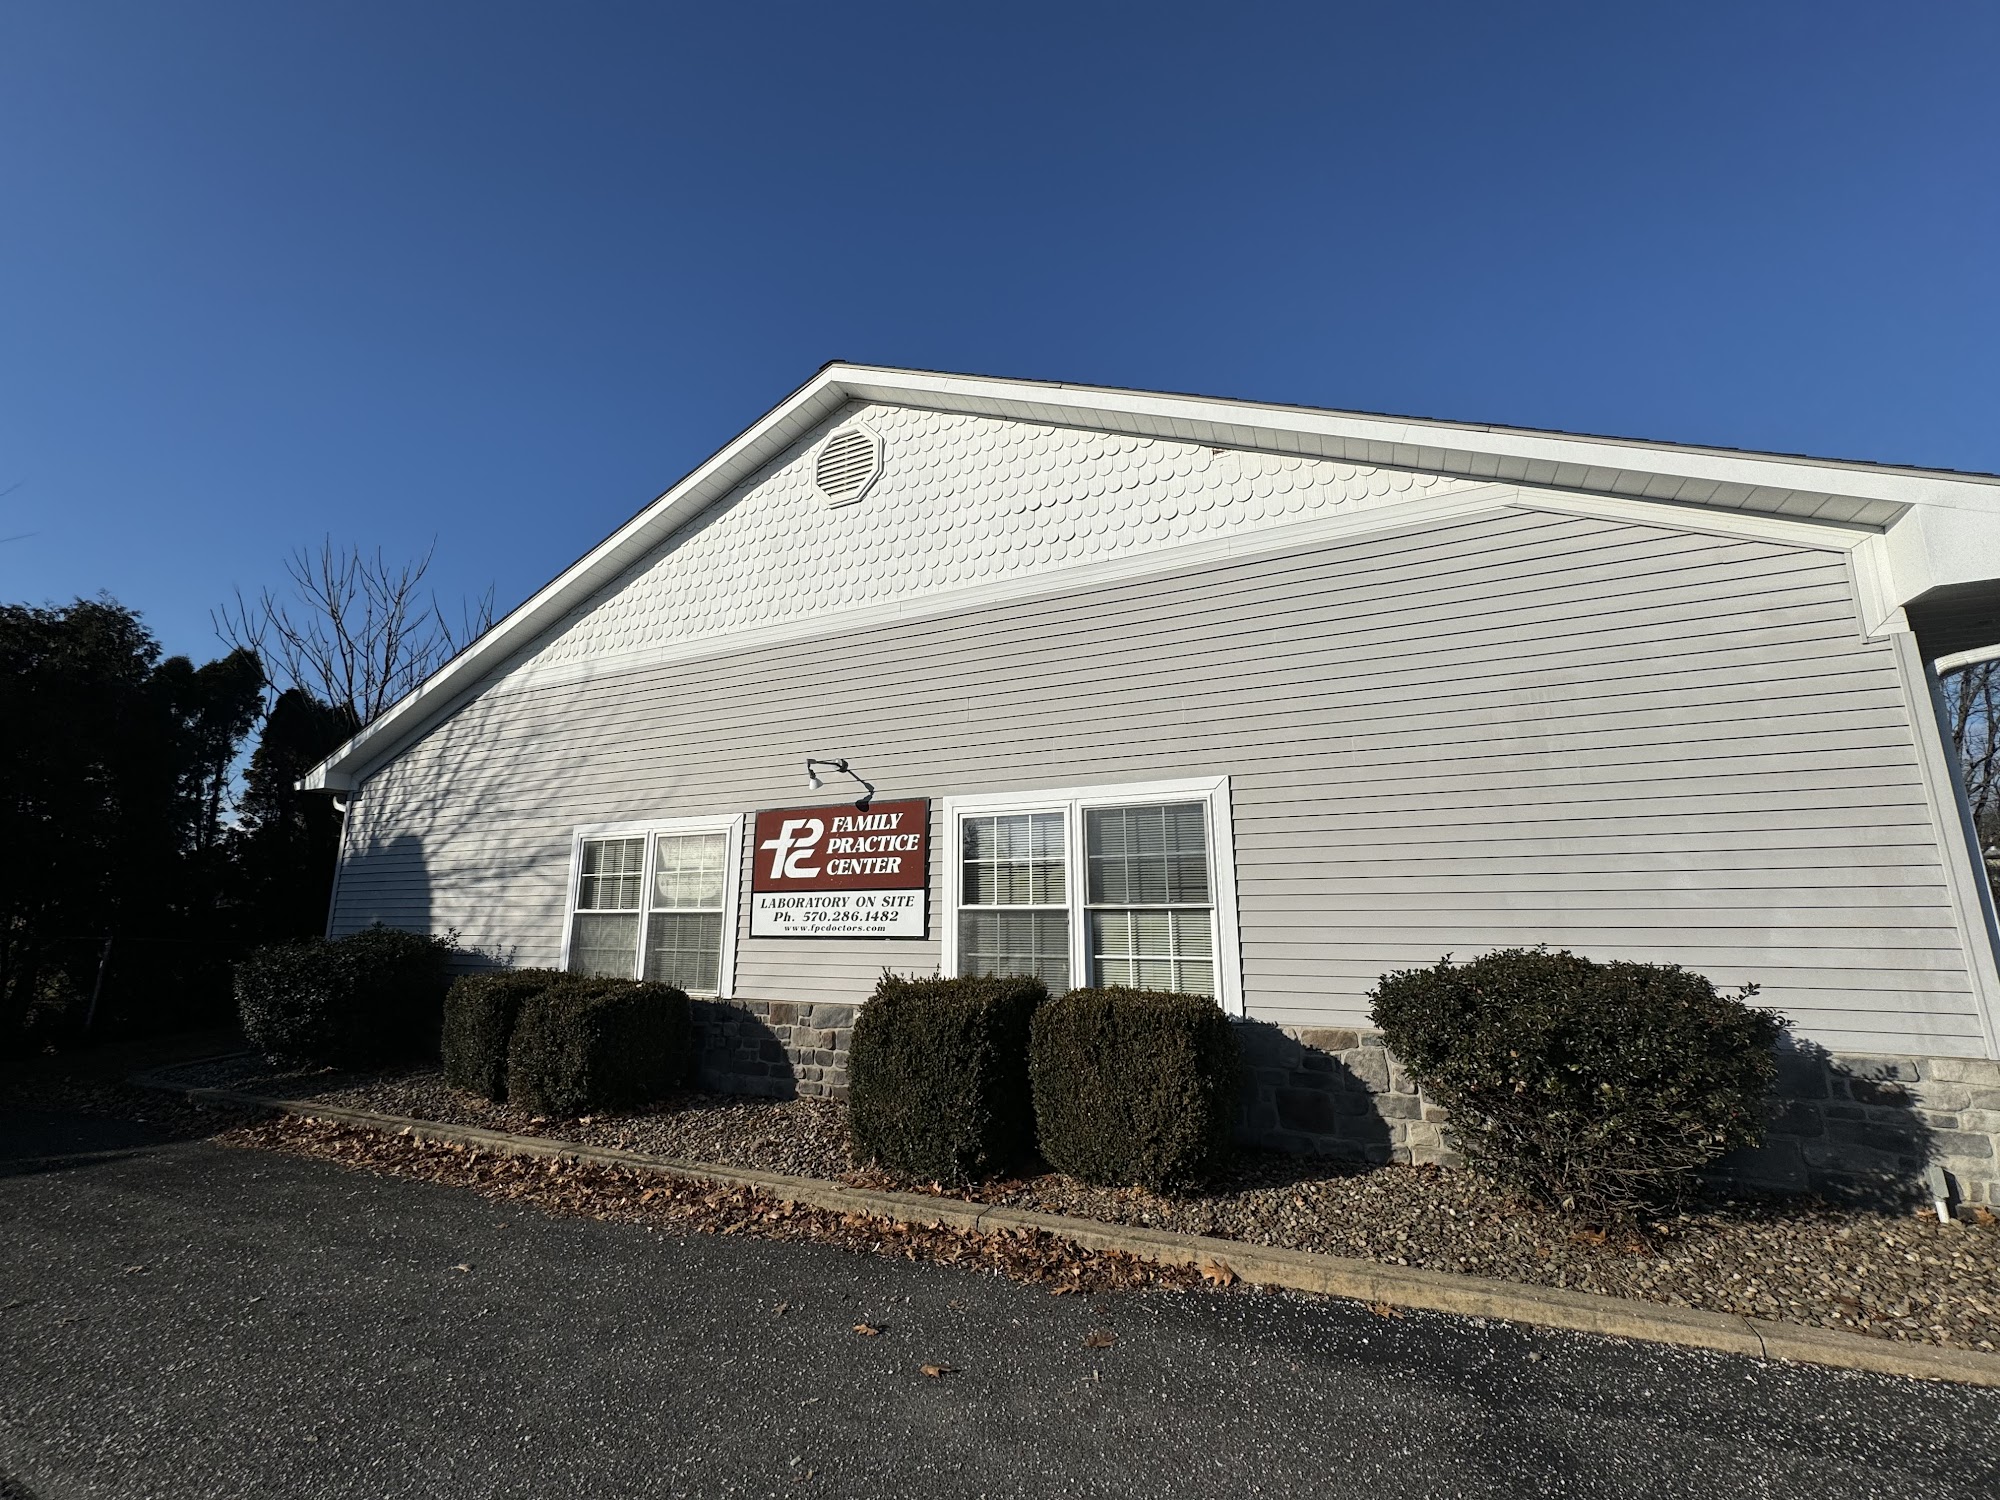 Family Practice Center, PC 409 N 4th St, Sunbury Pennsylvania 17801